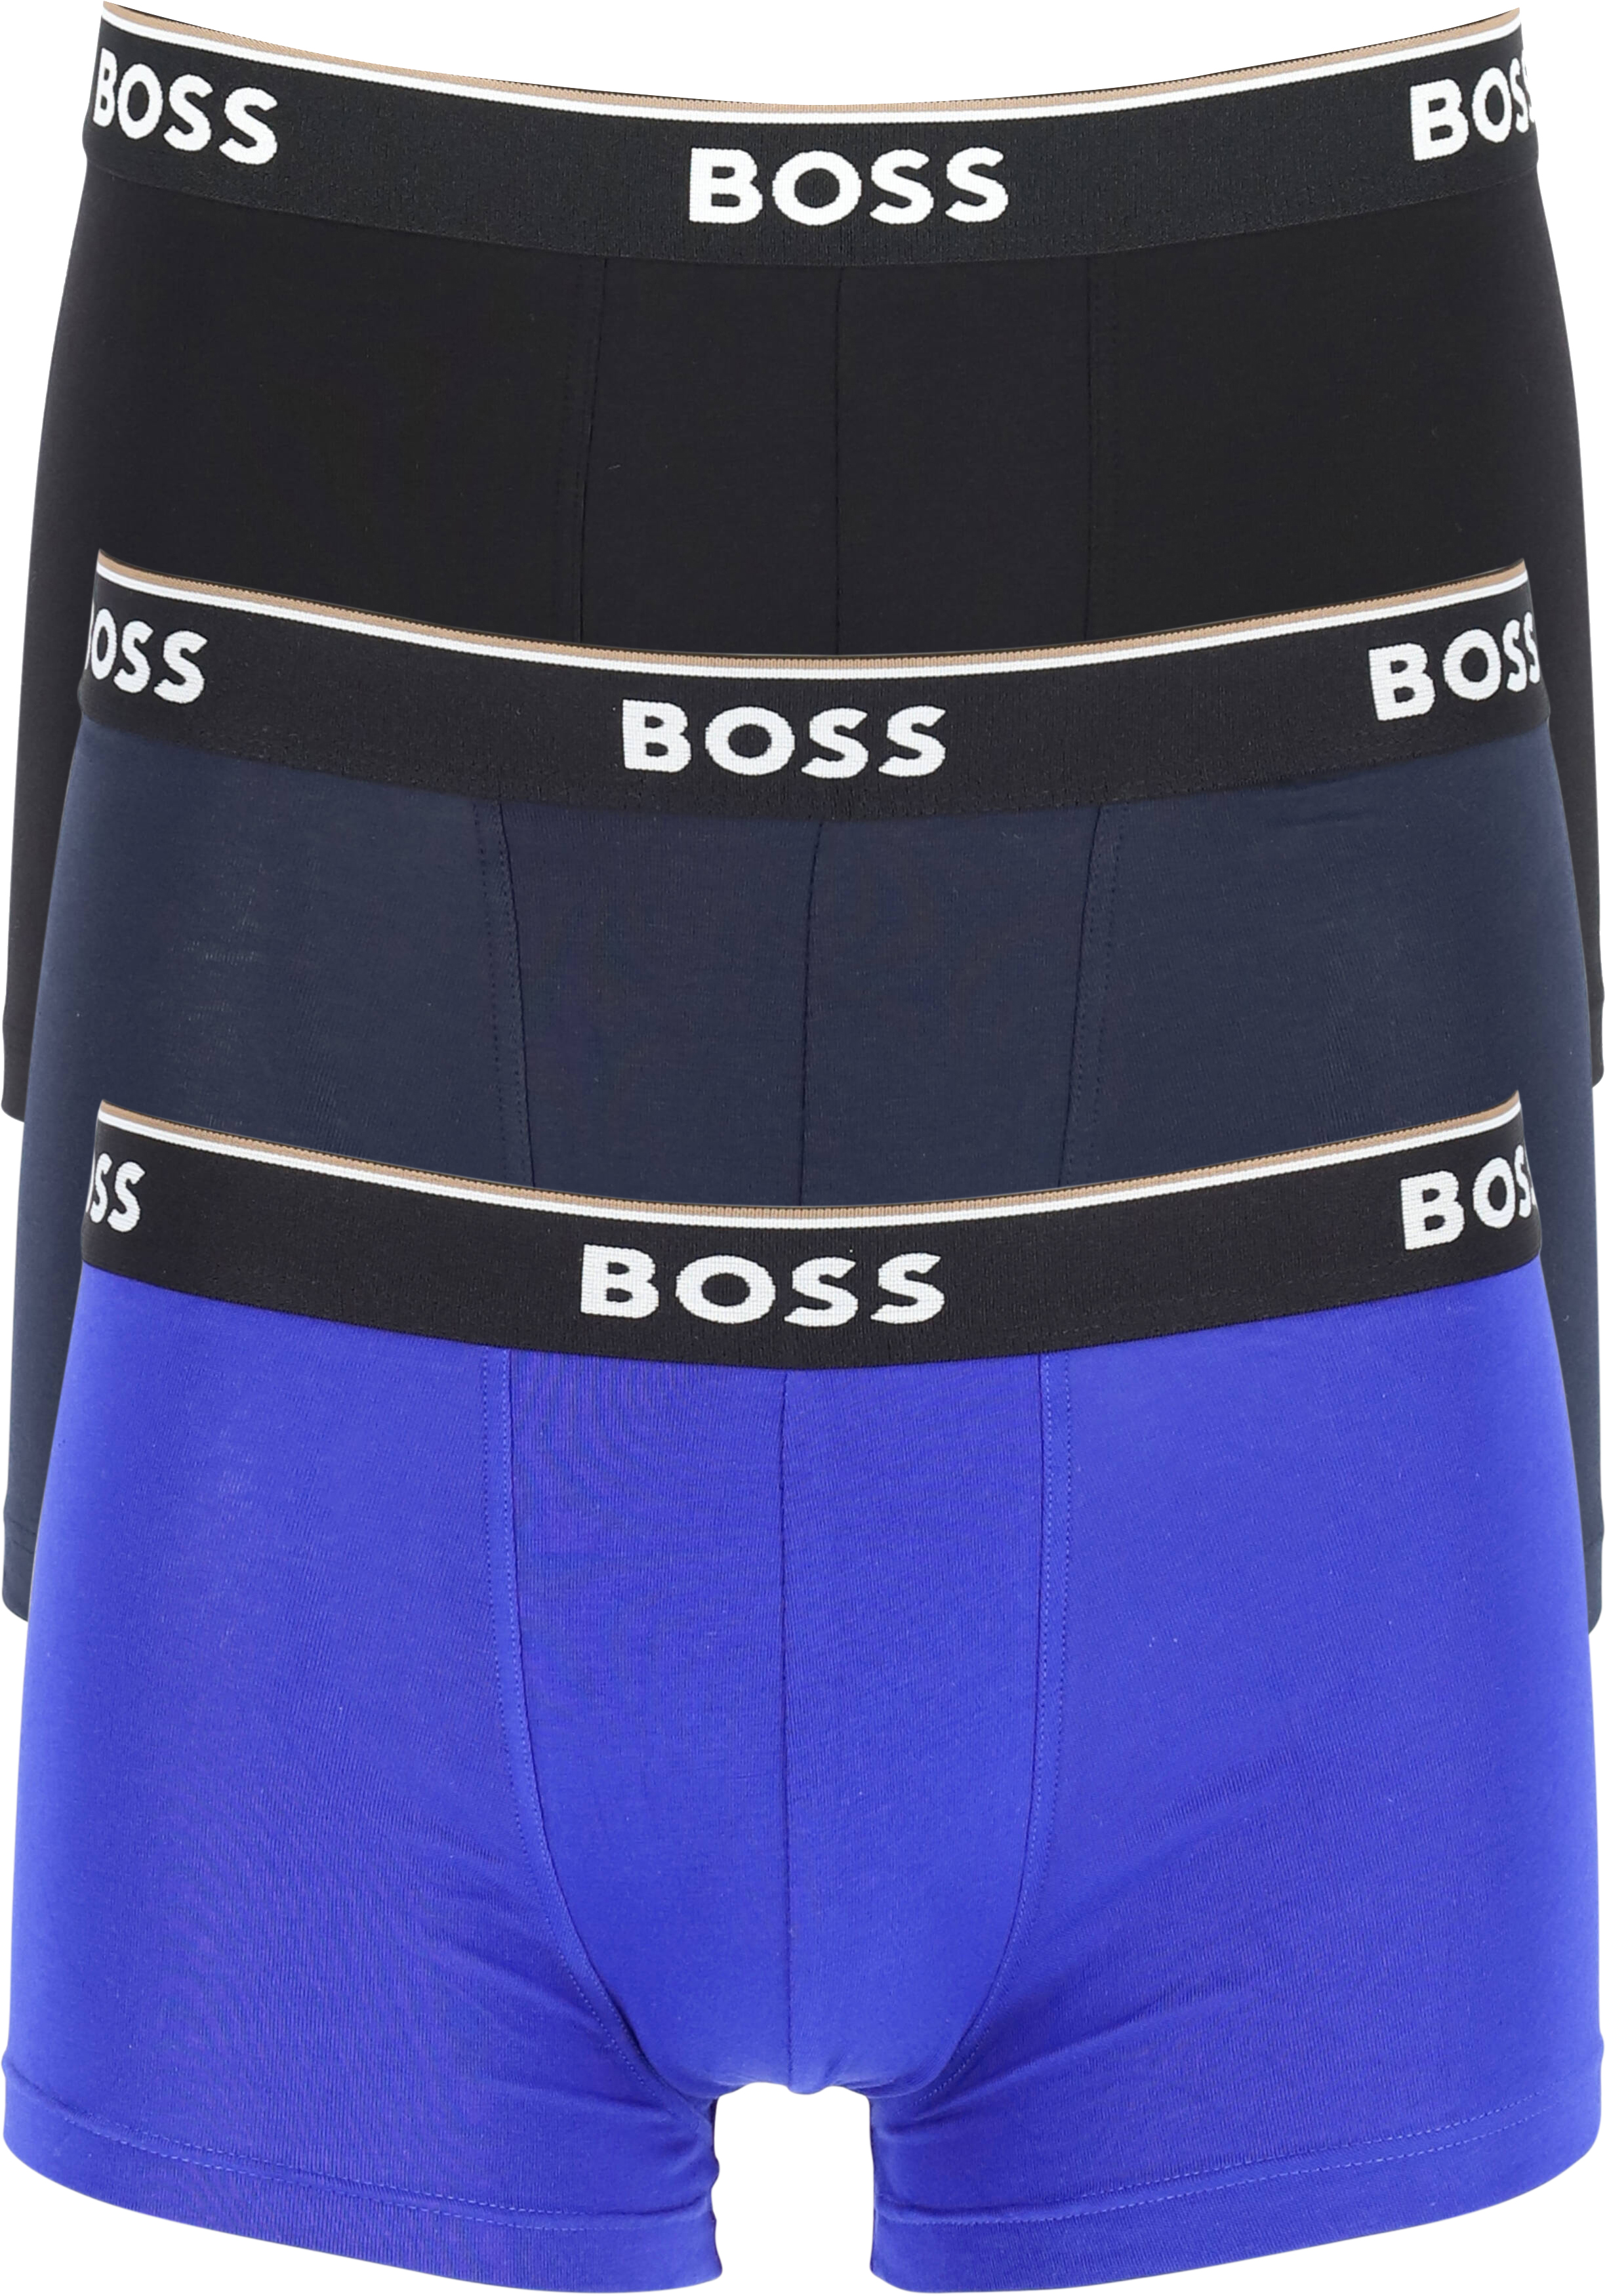 HUGO BOSS Power trunks (3-pack), heren boxers kort, blauw, zwart, blauw